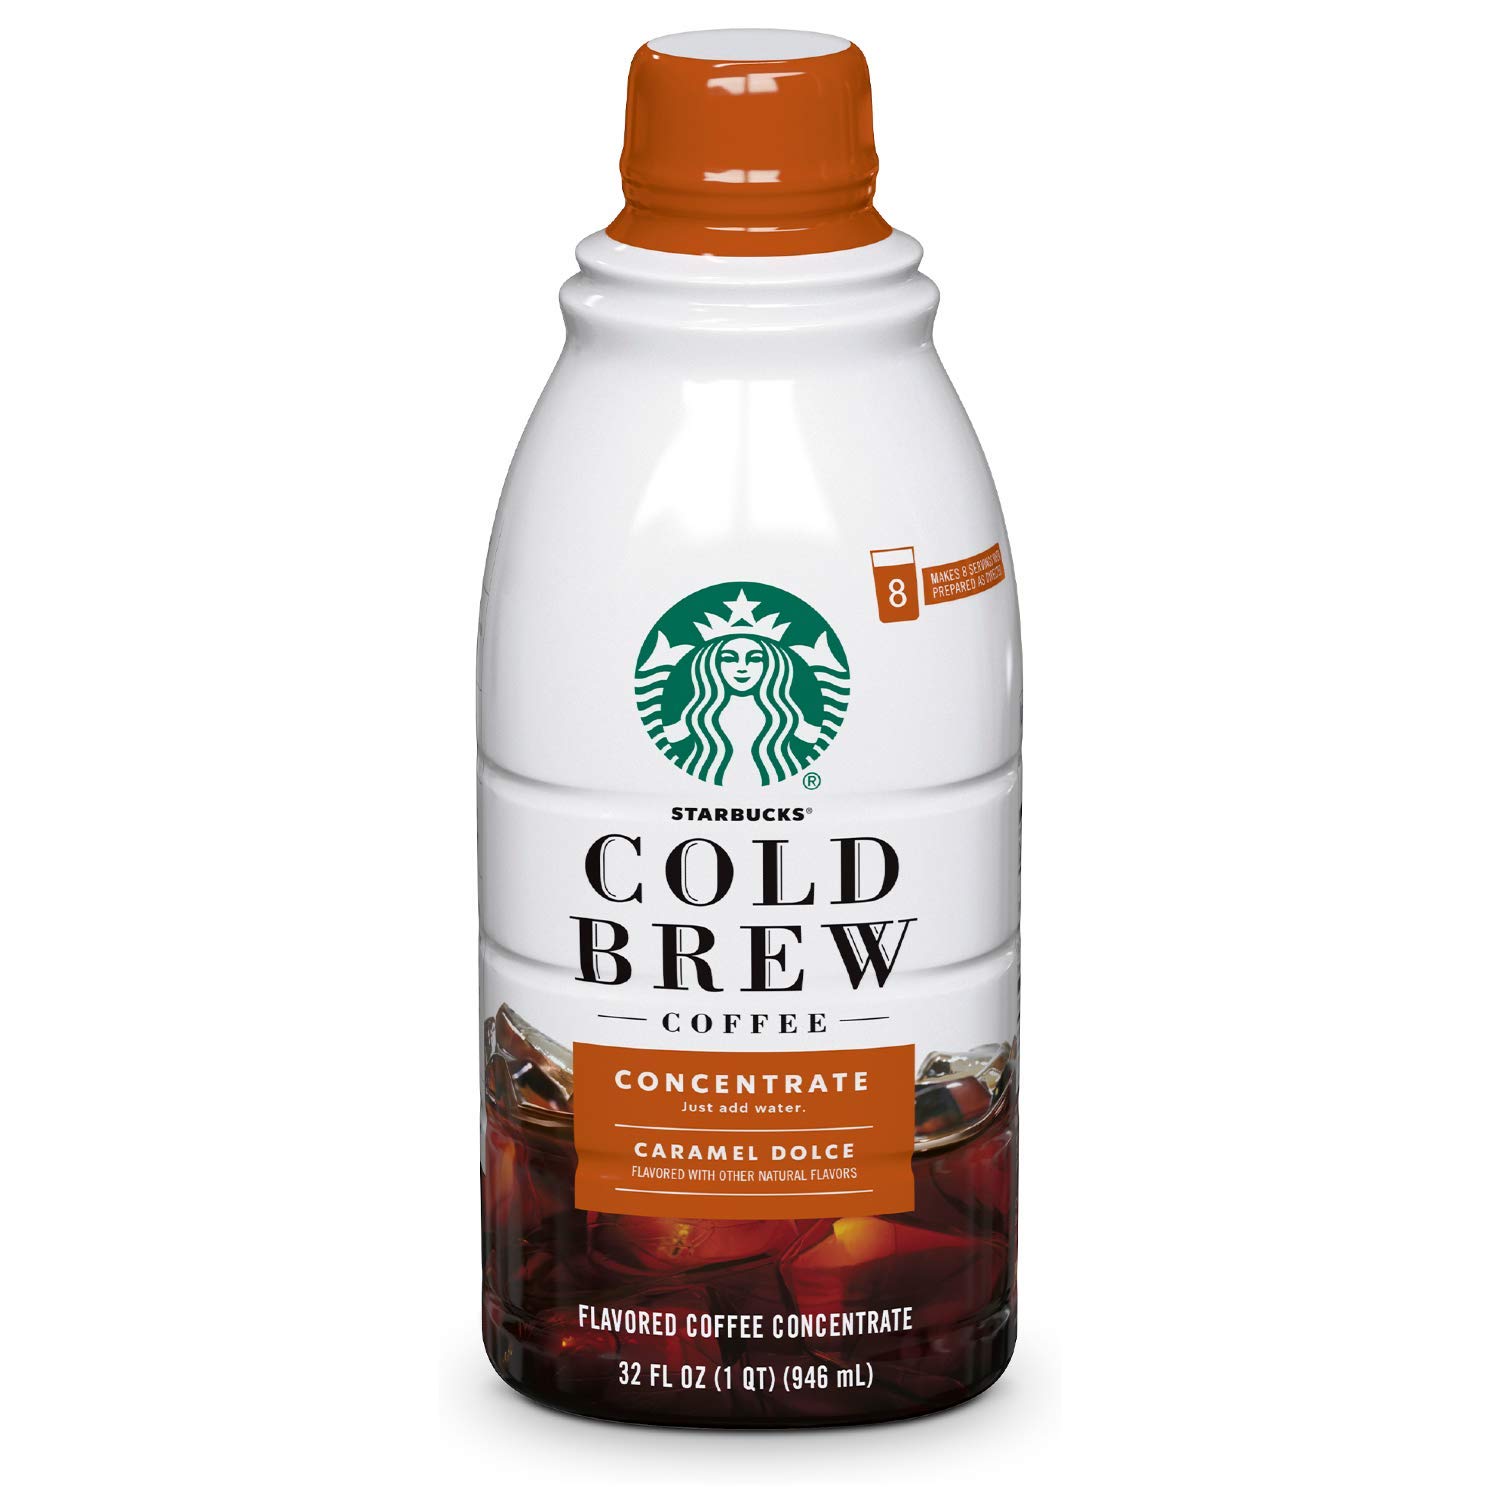 Starbucks Cold Brew Concentrate, Caramel Dolce, 32 FL OZ